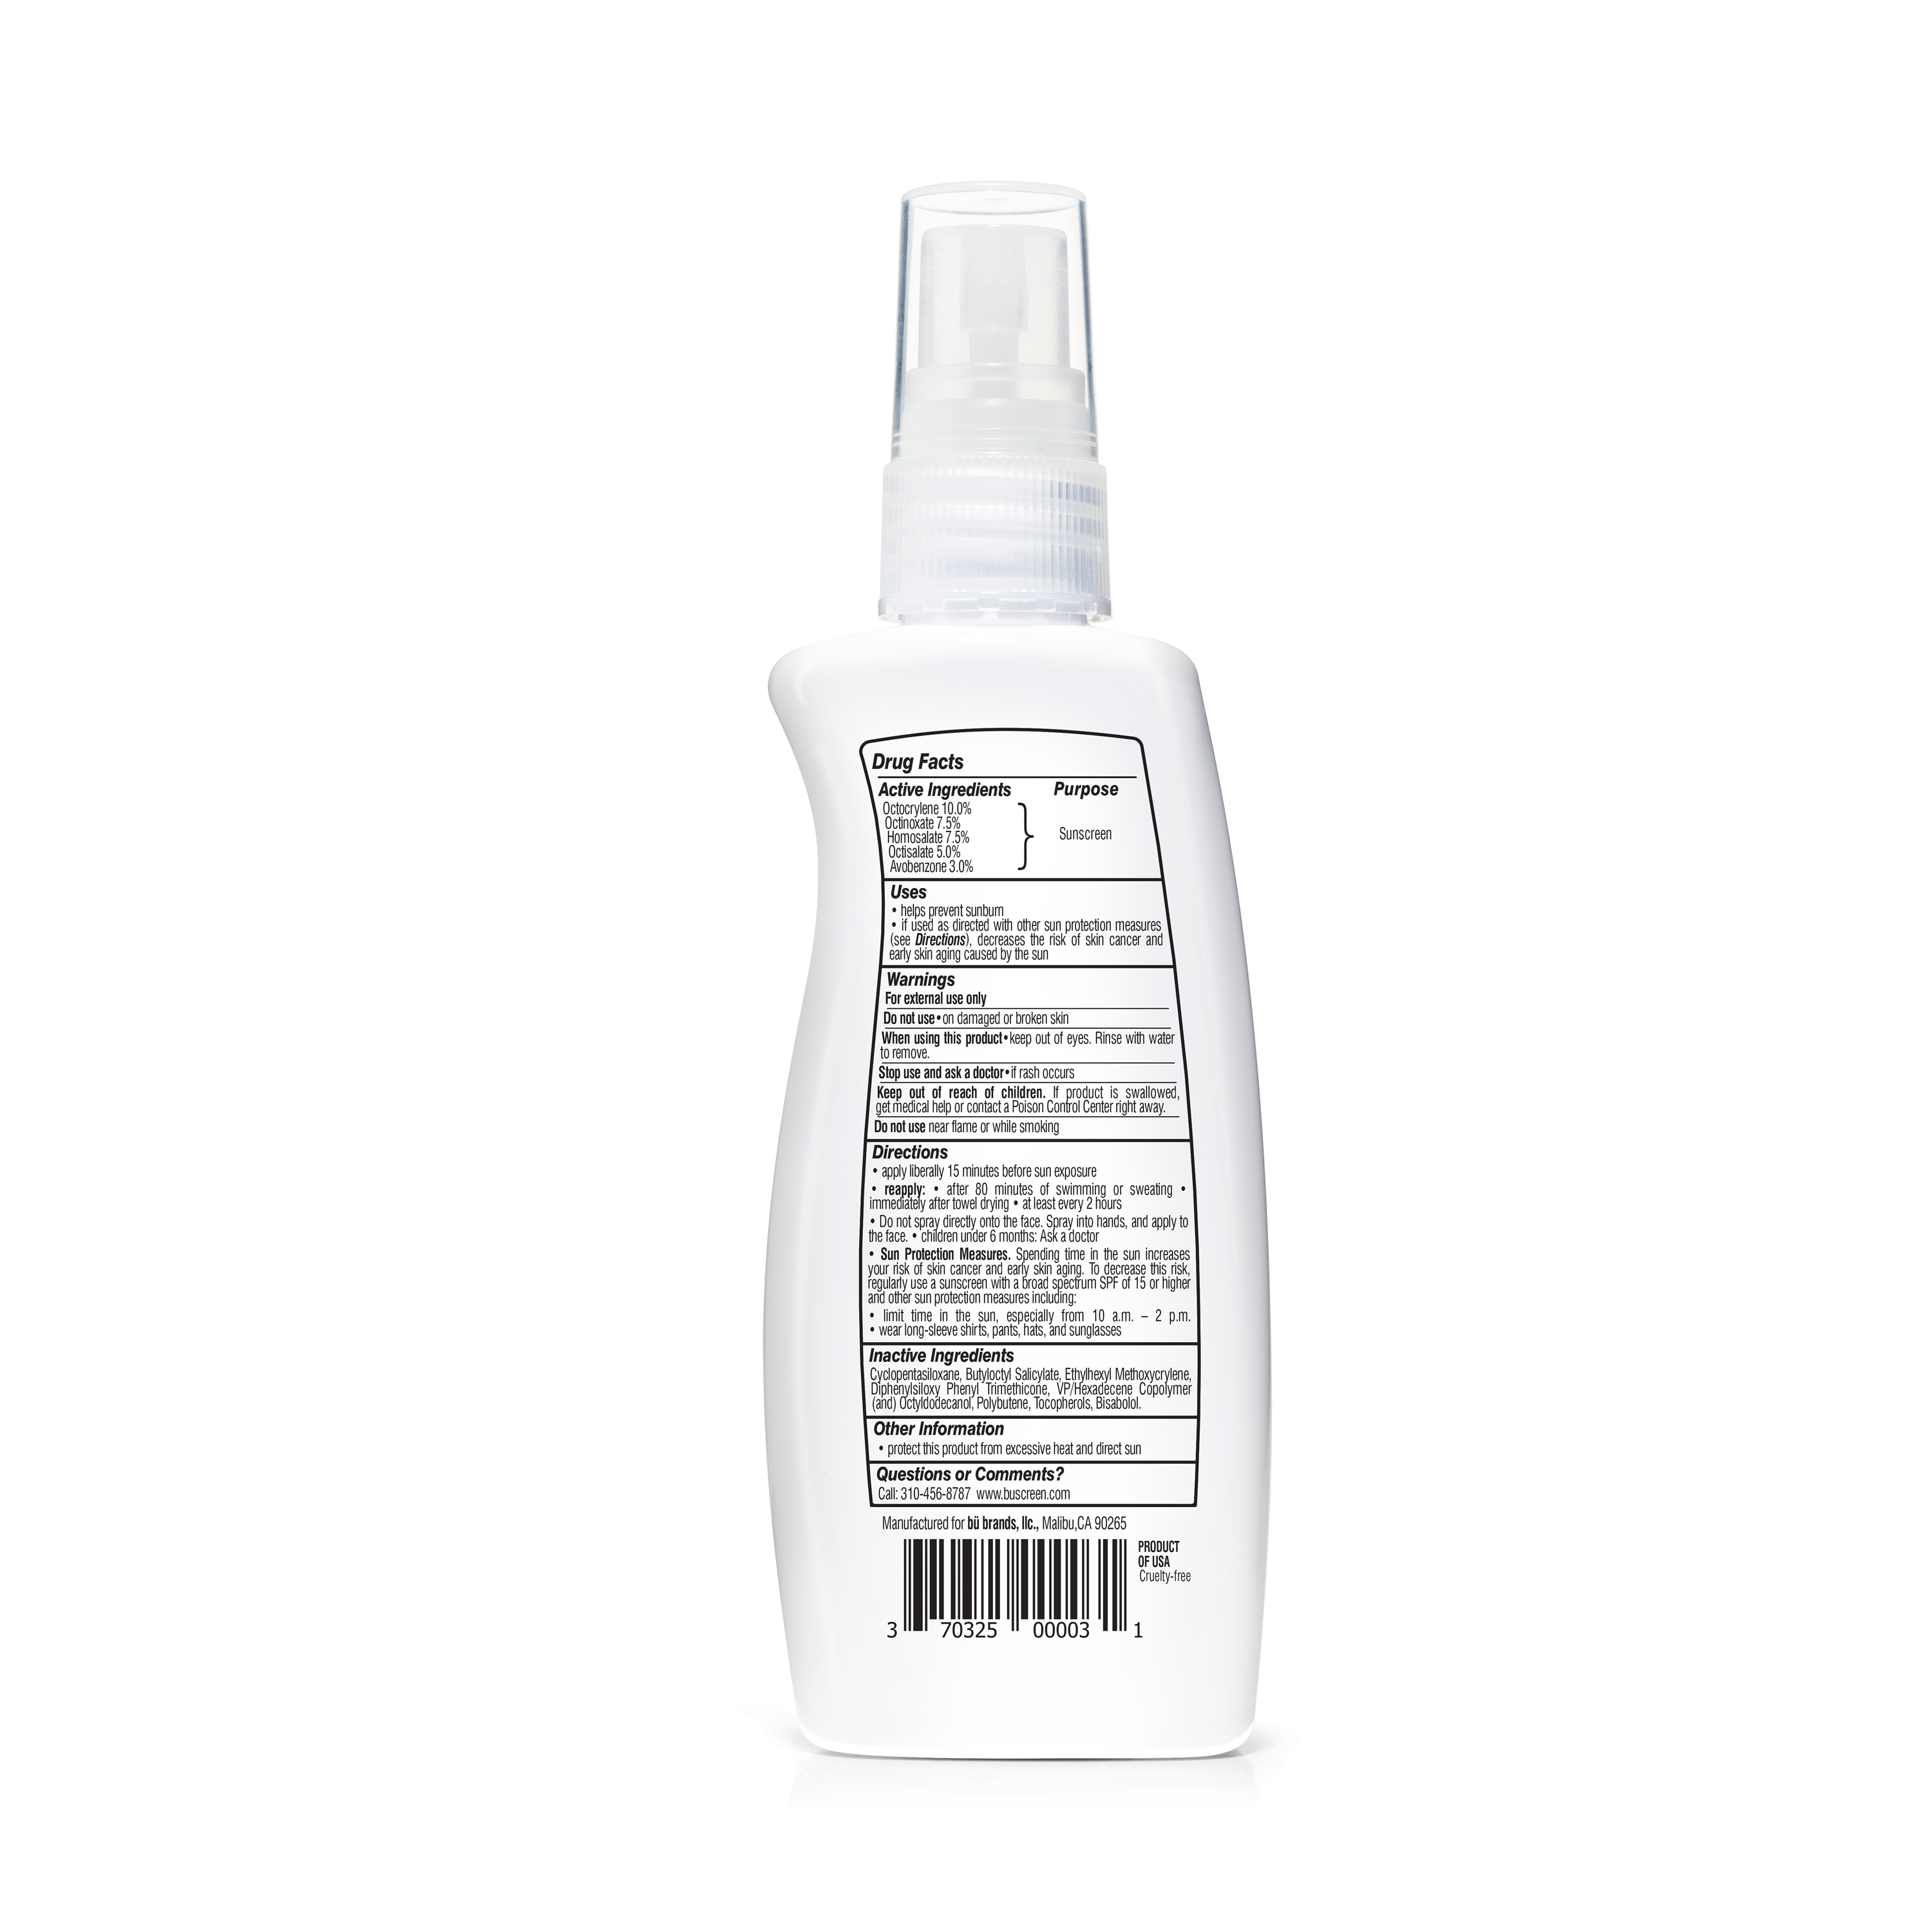 BU 3-Pack (3.3oz) KIDS SPF 50 Alcohol-Free Sunscreen Spray - Fragrance Free